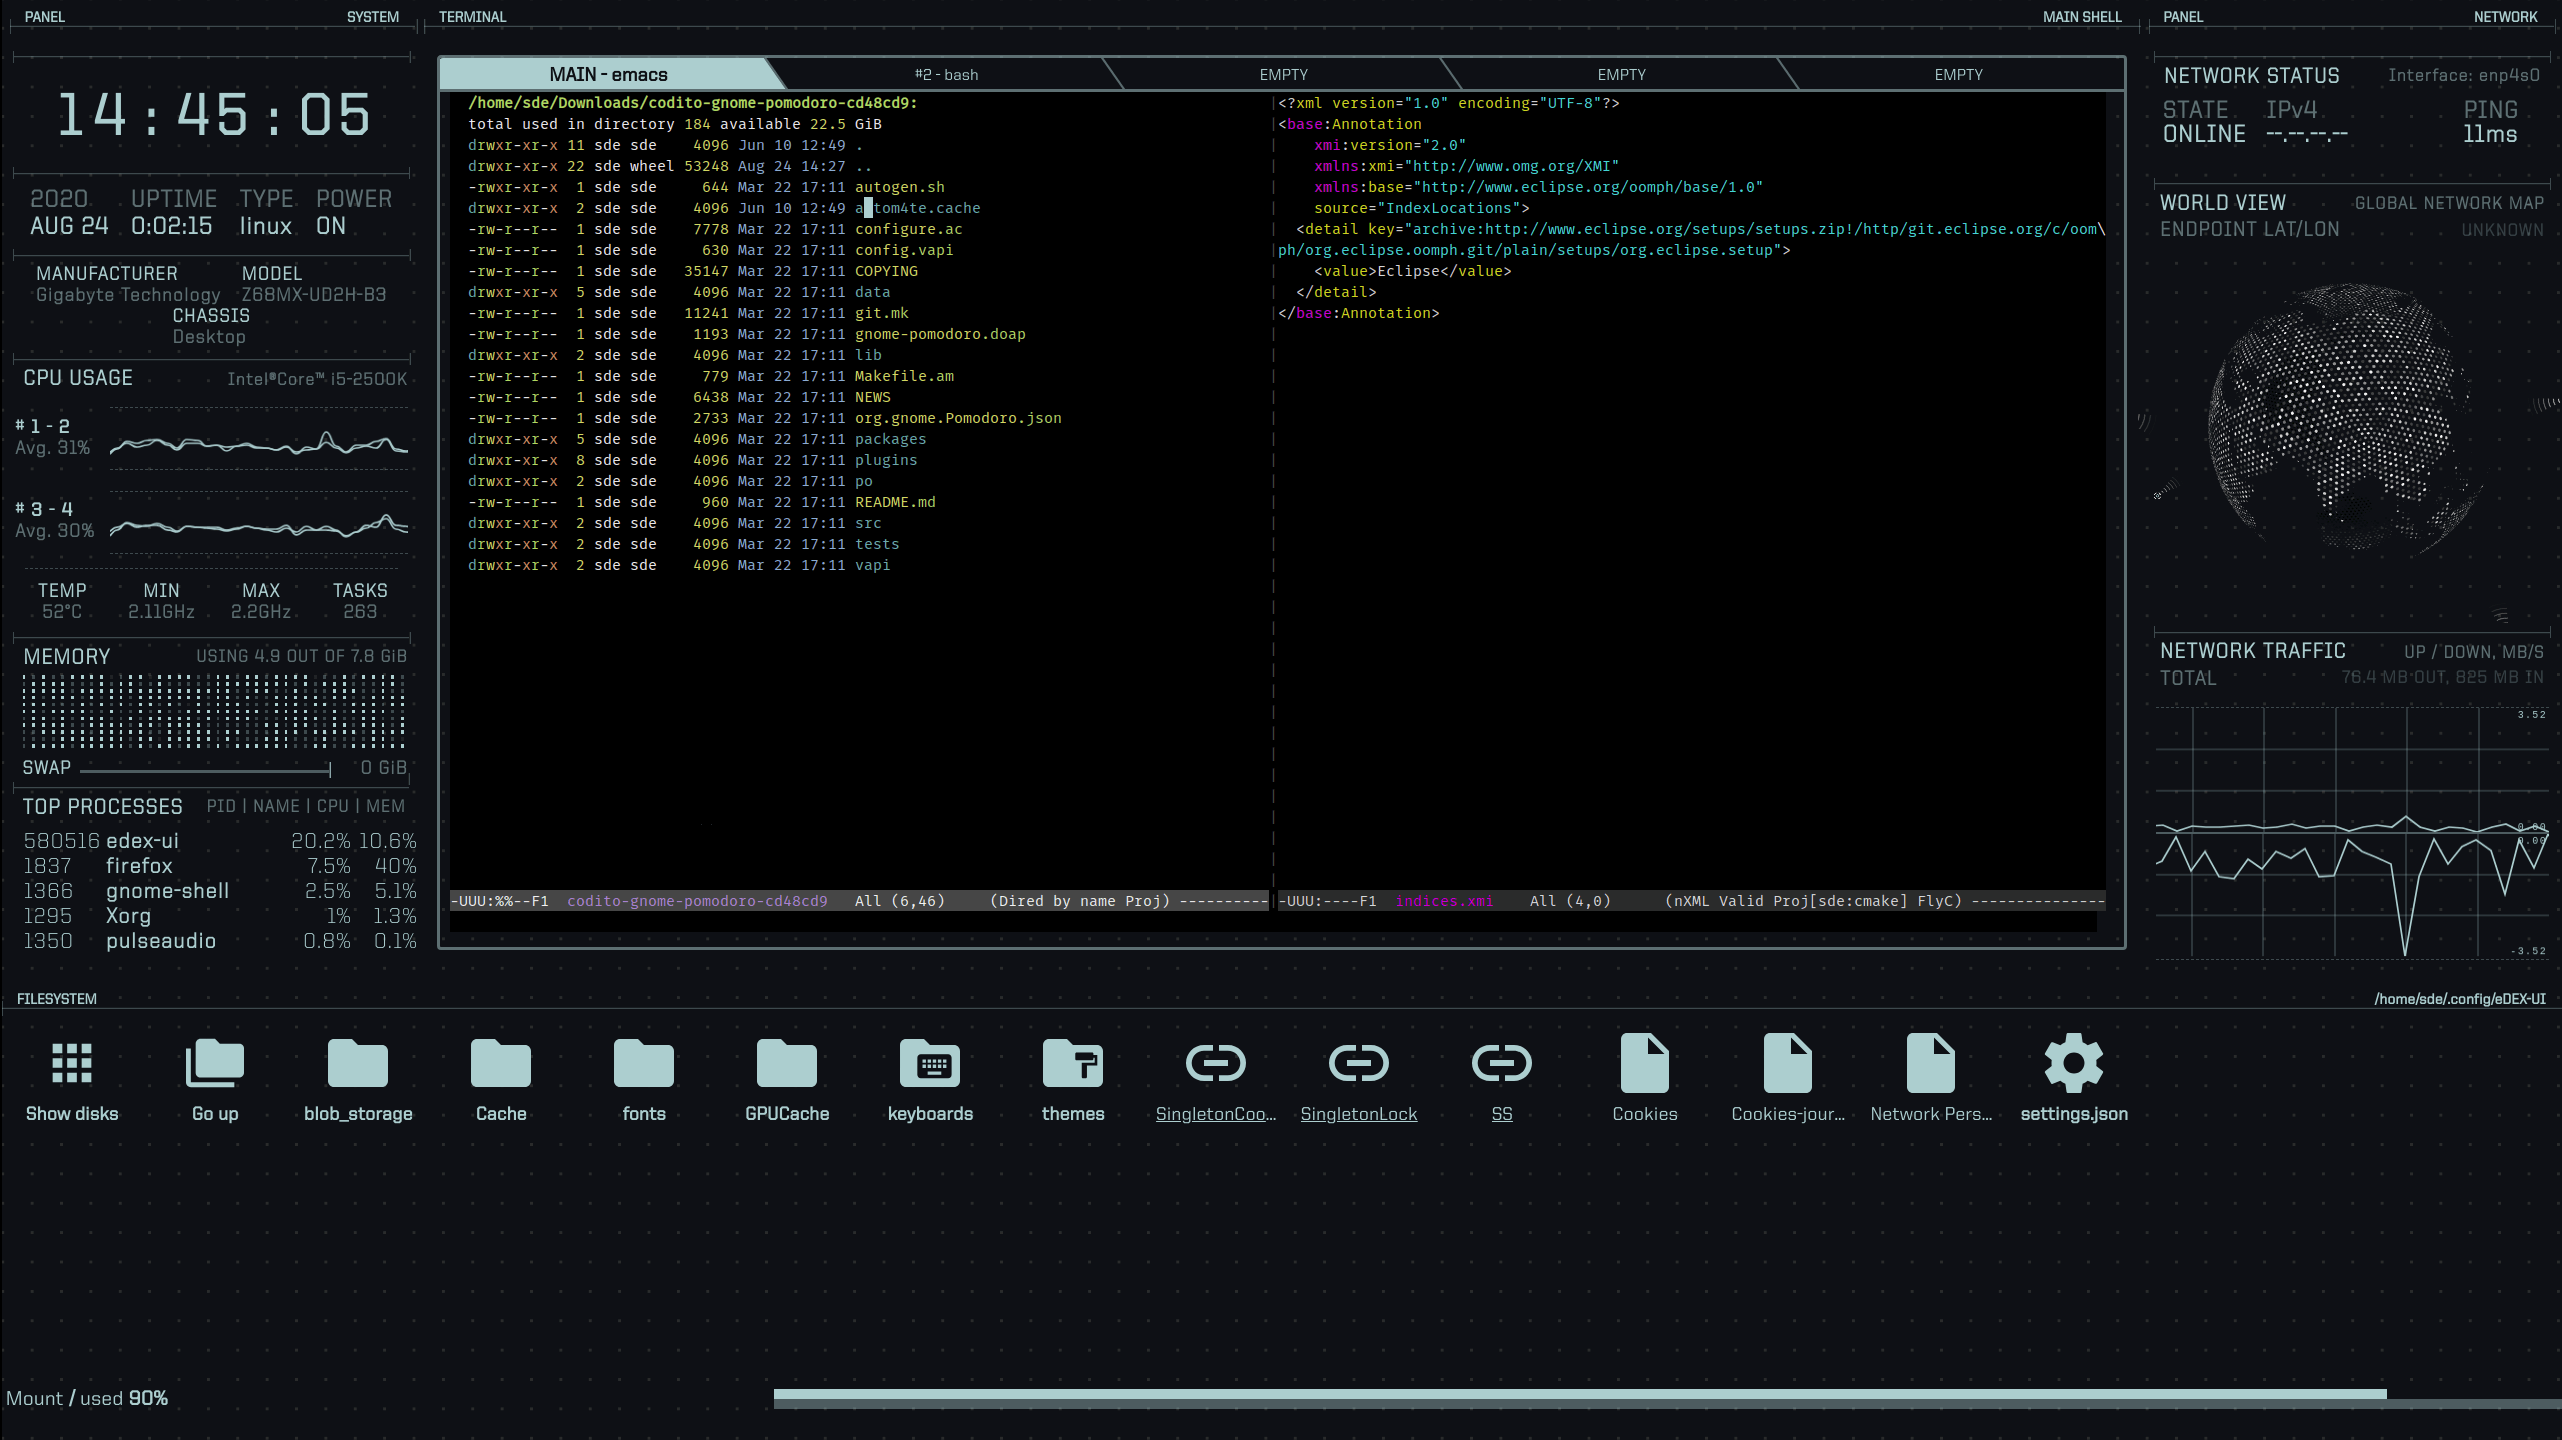 eDEX-UI - no virtual keyboard